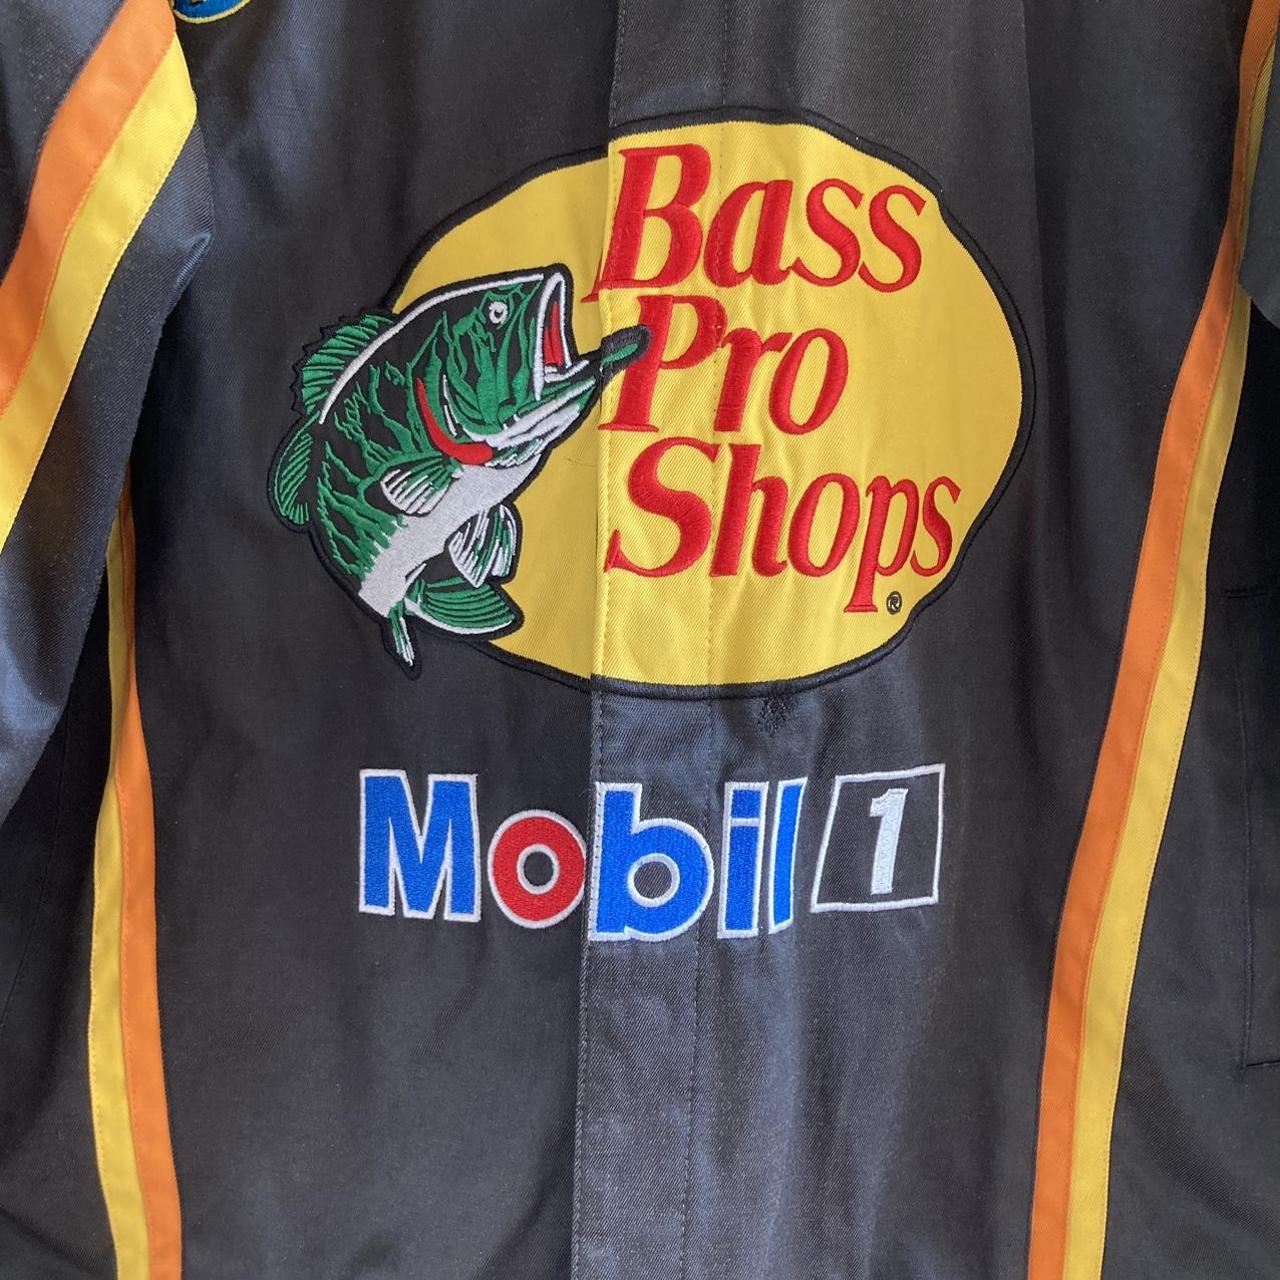 NASCAR Chase Authentics Bass Pro Shops Tony Stewart